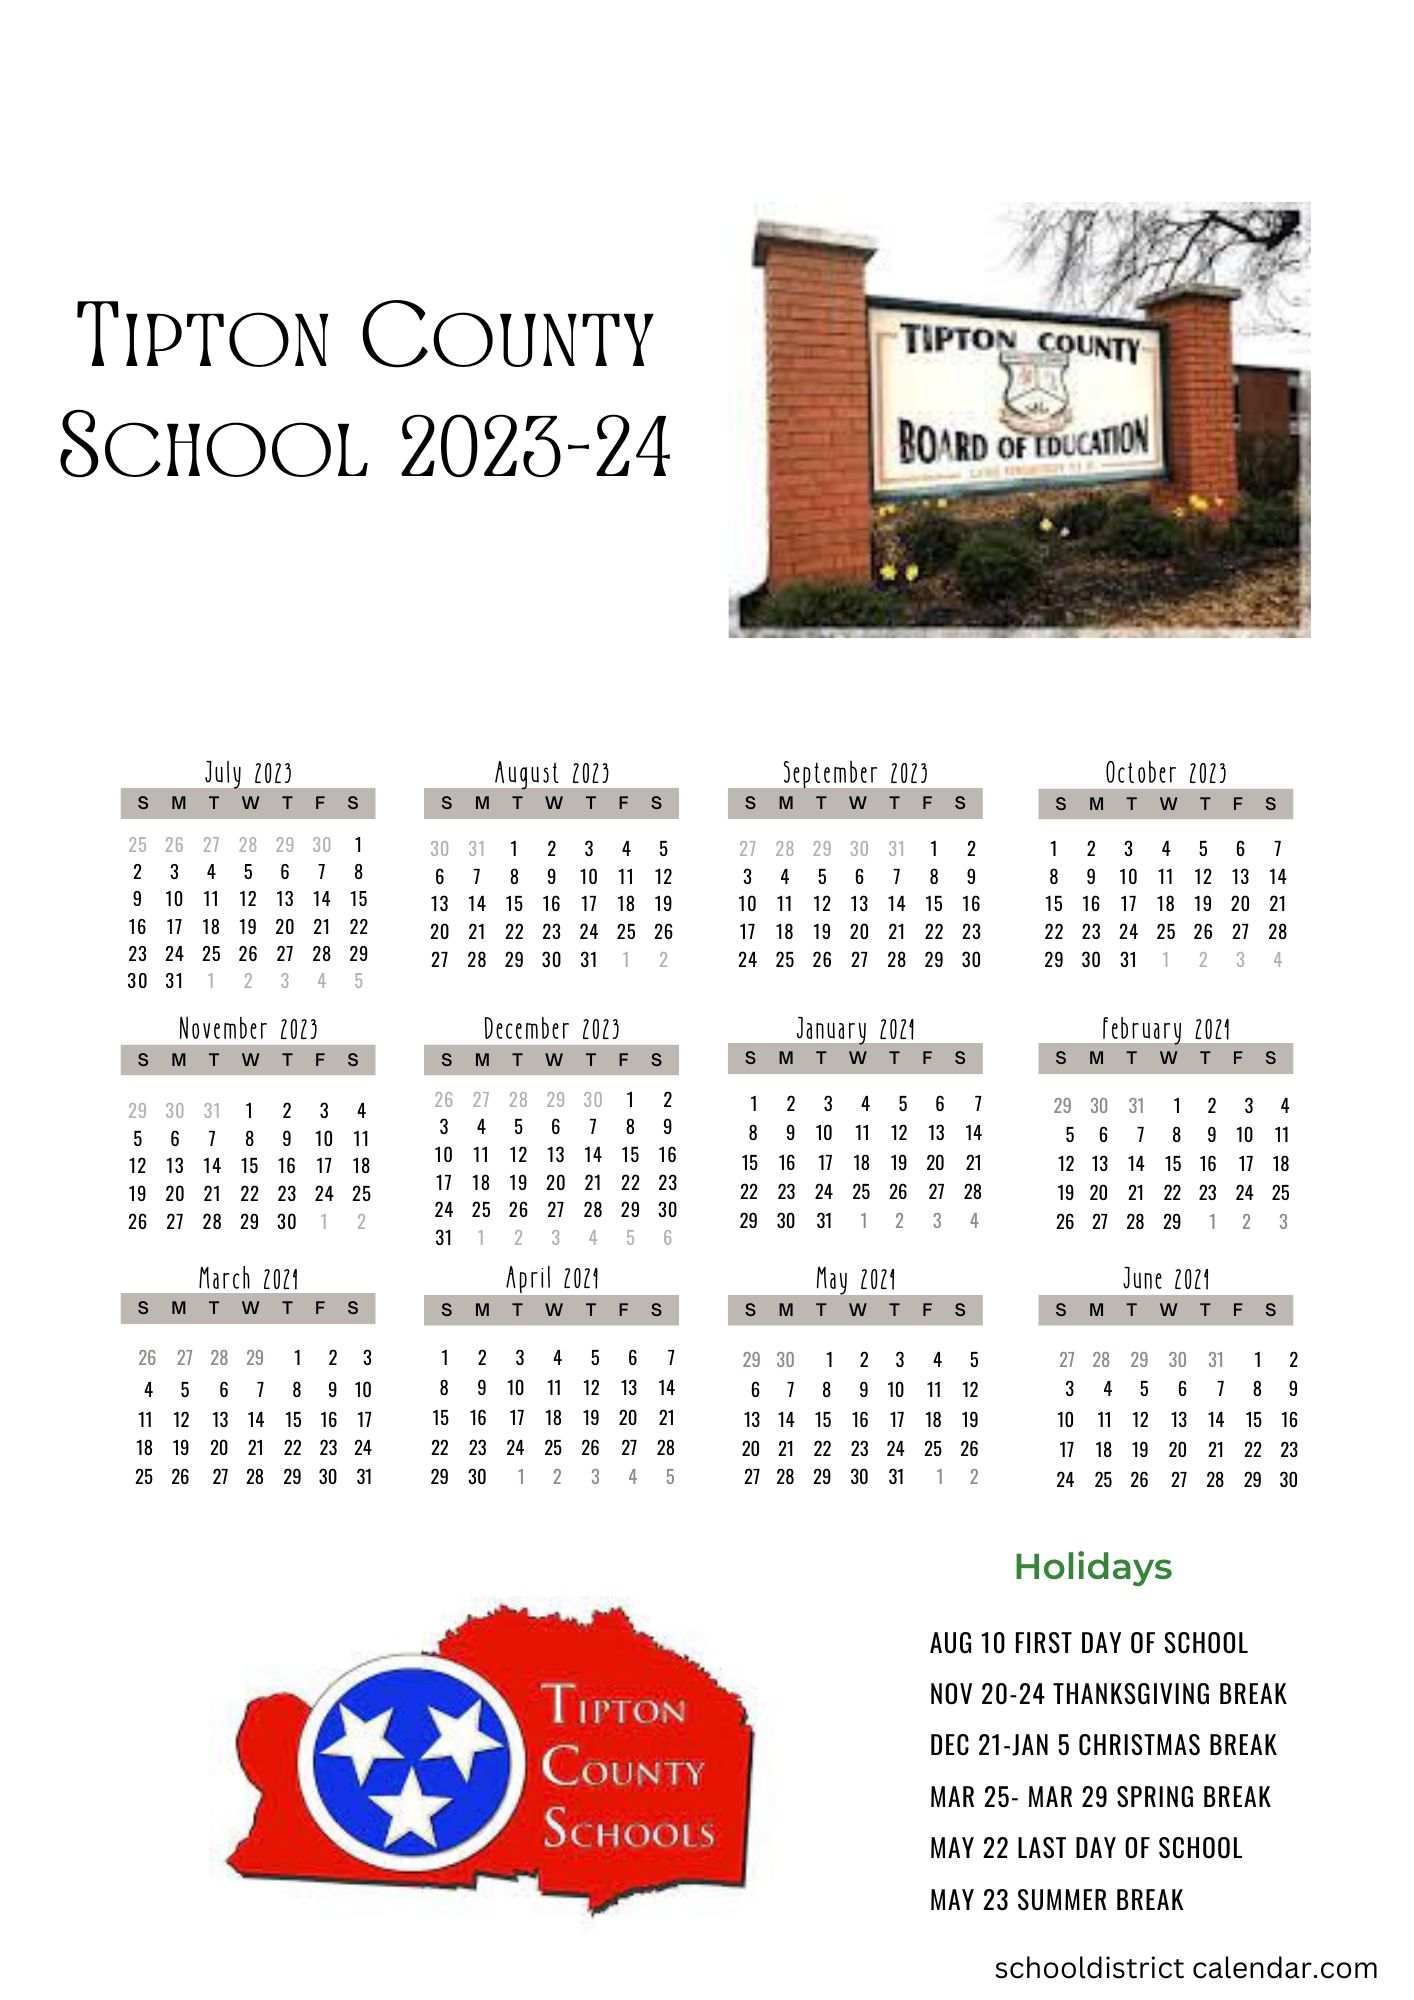 Tipton County Schools Calendar with Holidays 20232024